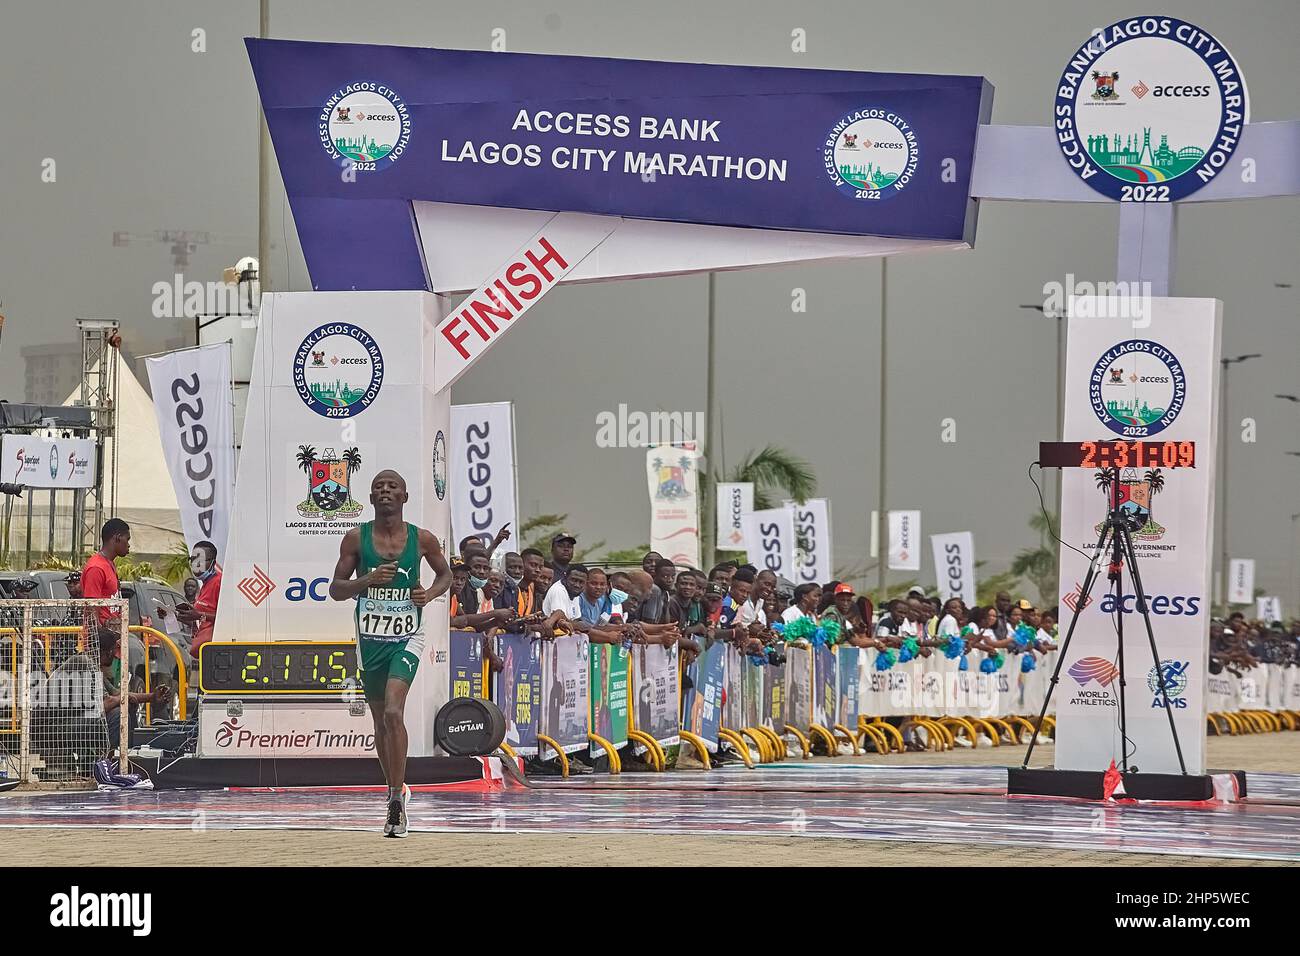 Nigerian winner, Adamu Shehu Muazu crosses the finish line in the Access Bank Lagos City Marathon, a 42km Silver-Label Race held in Lagos, Nigeria. Stock Photo